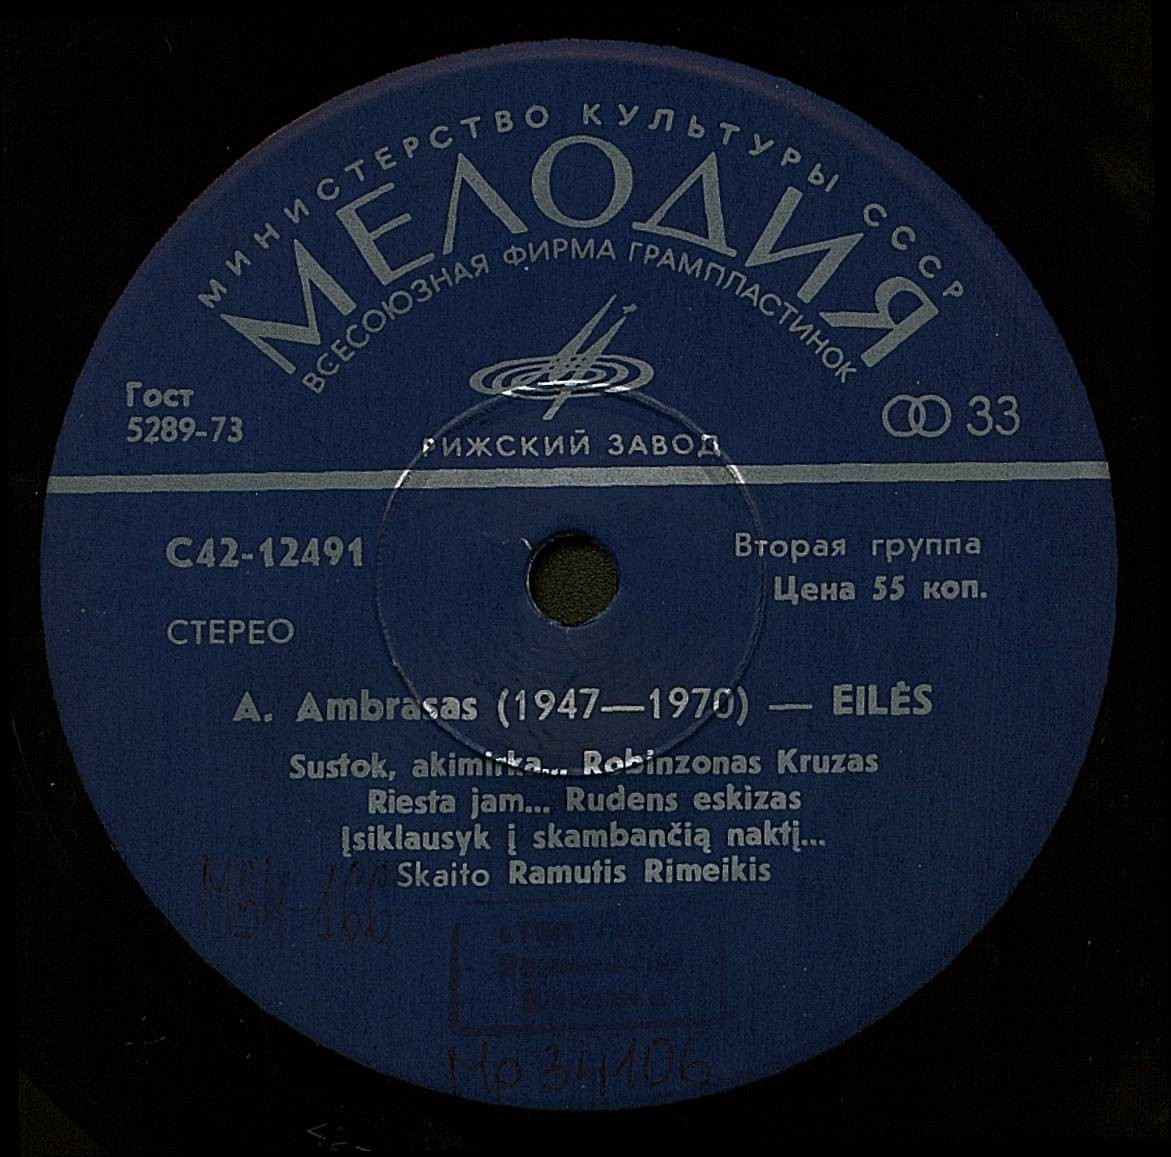 А. АМБРАСАС (1947—1970): Стихотворения